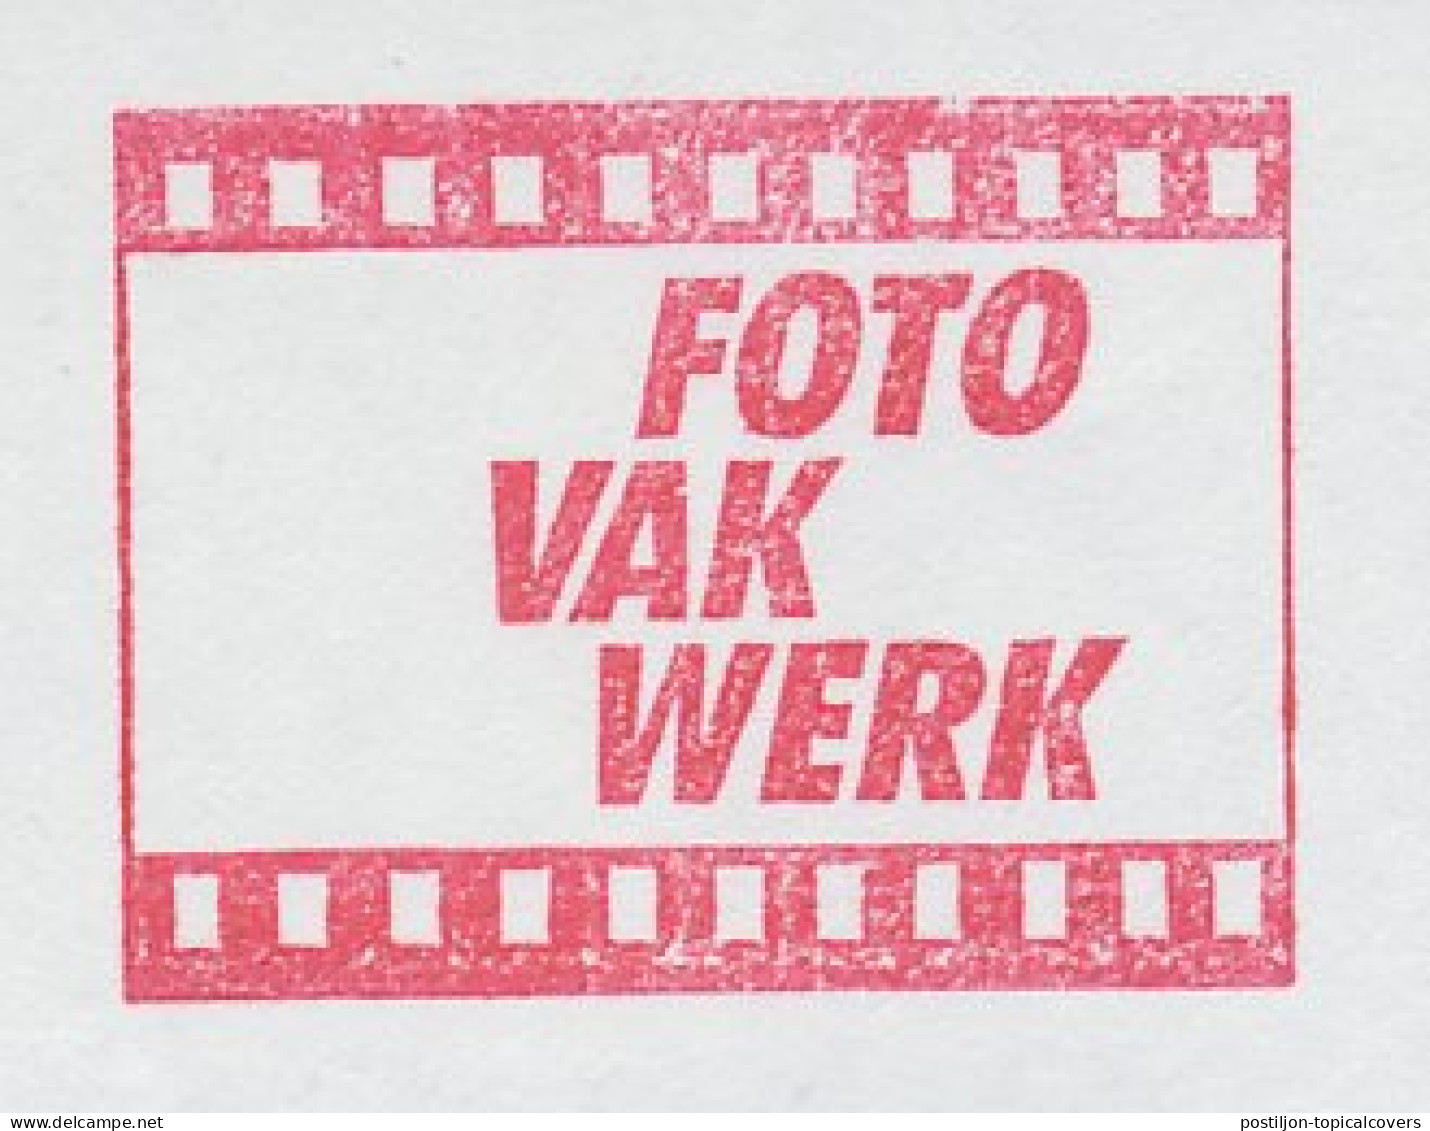 Meter Cut Netherlands 1984 Photo Professional Work - Fotografie